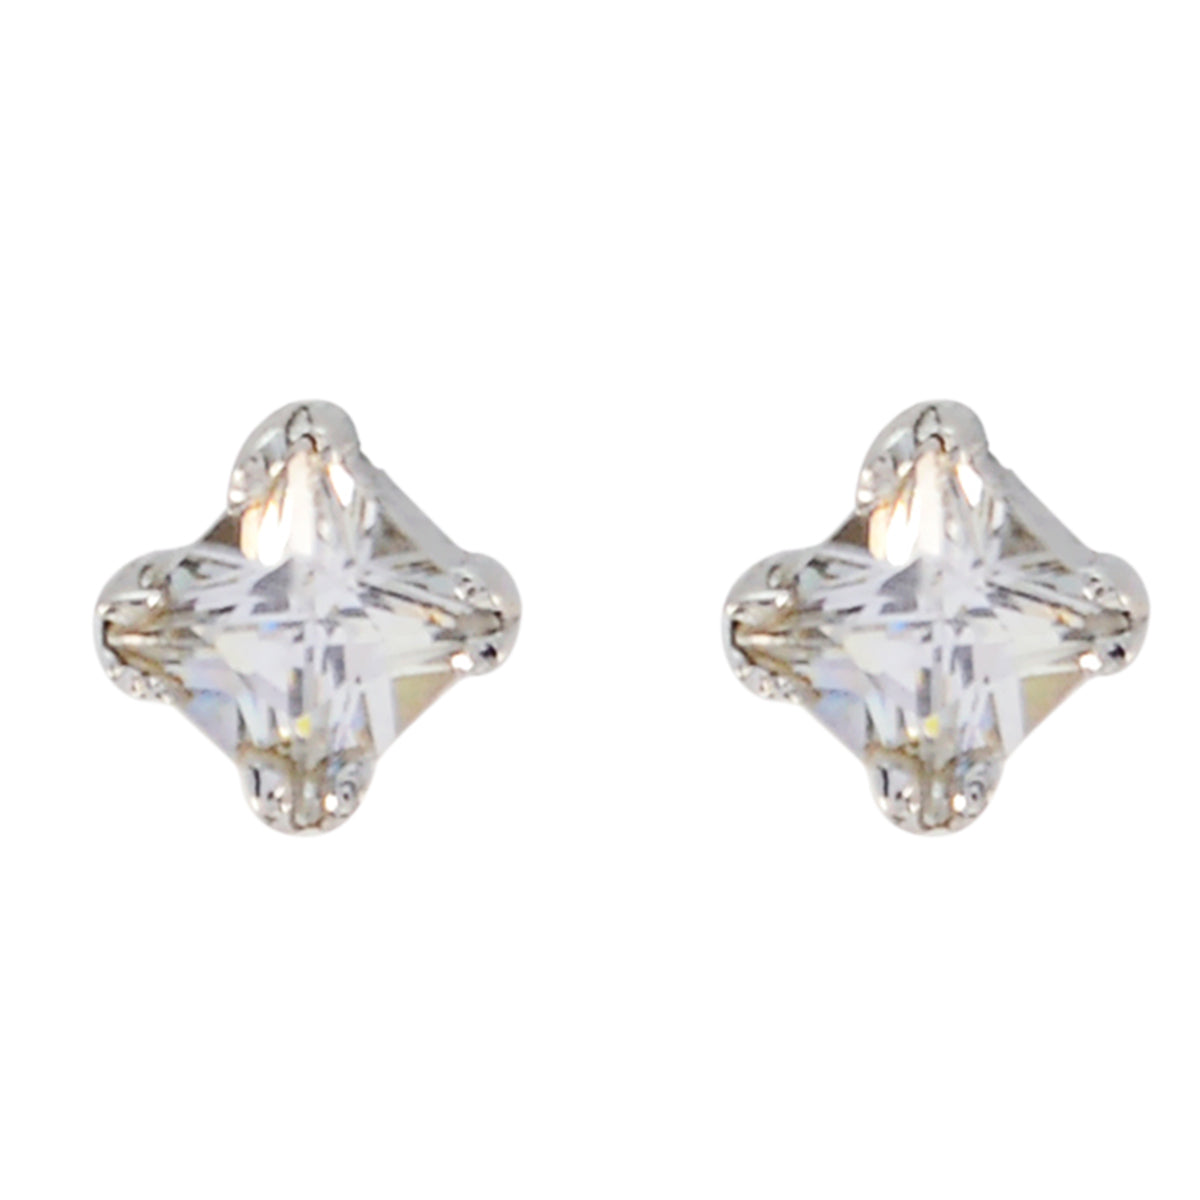 Riyo Nice Gemstone square Faceted White Crystal Quartz Silver Earring sister gift